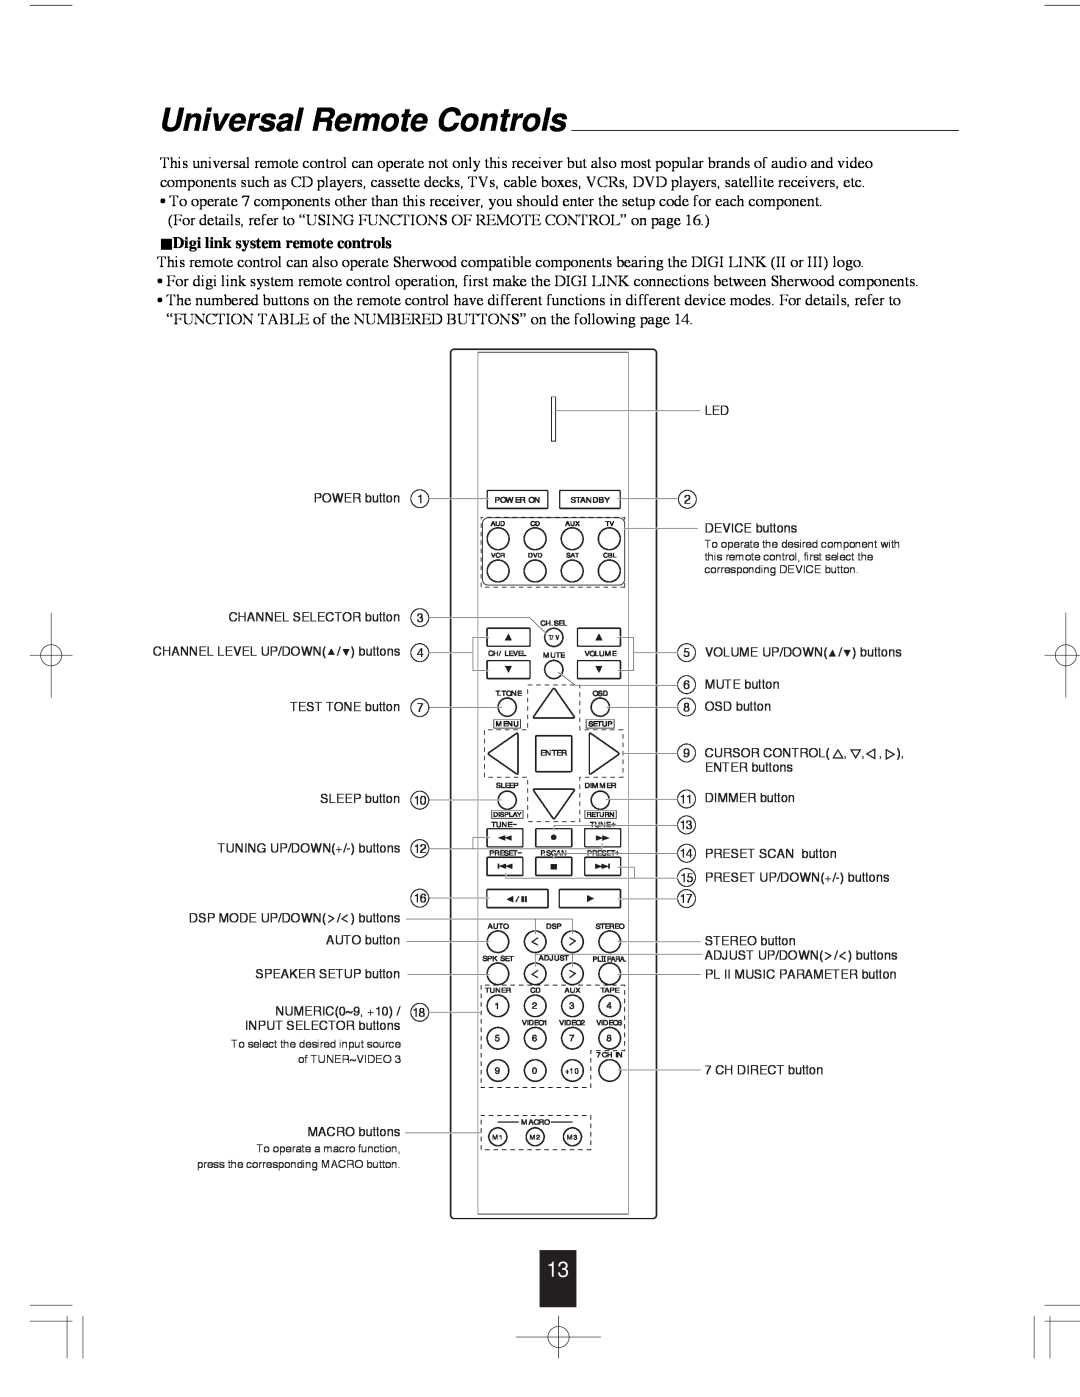 Sherwood R-765 manual Universal Remote Controls, Digi link system remote controls 